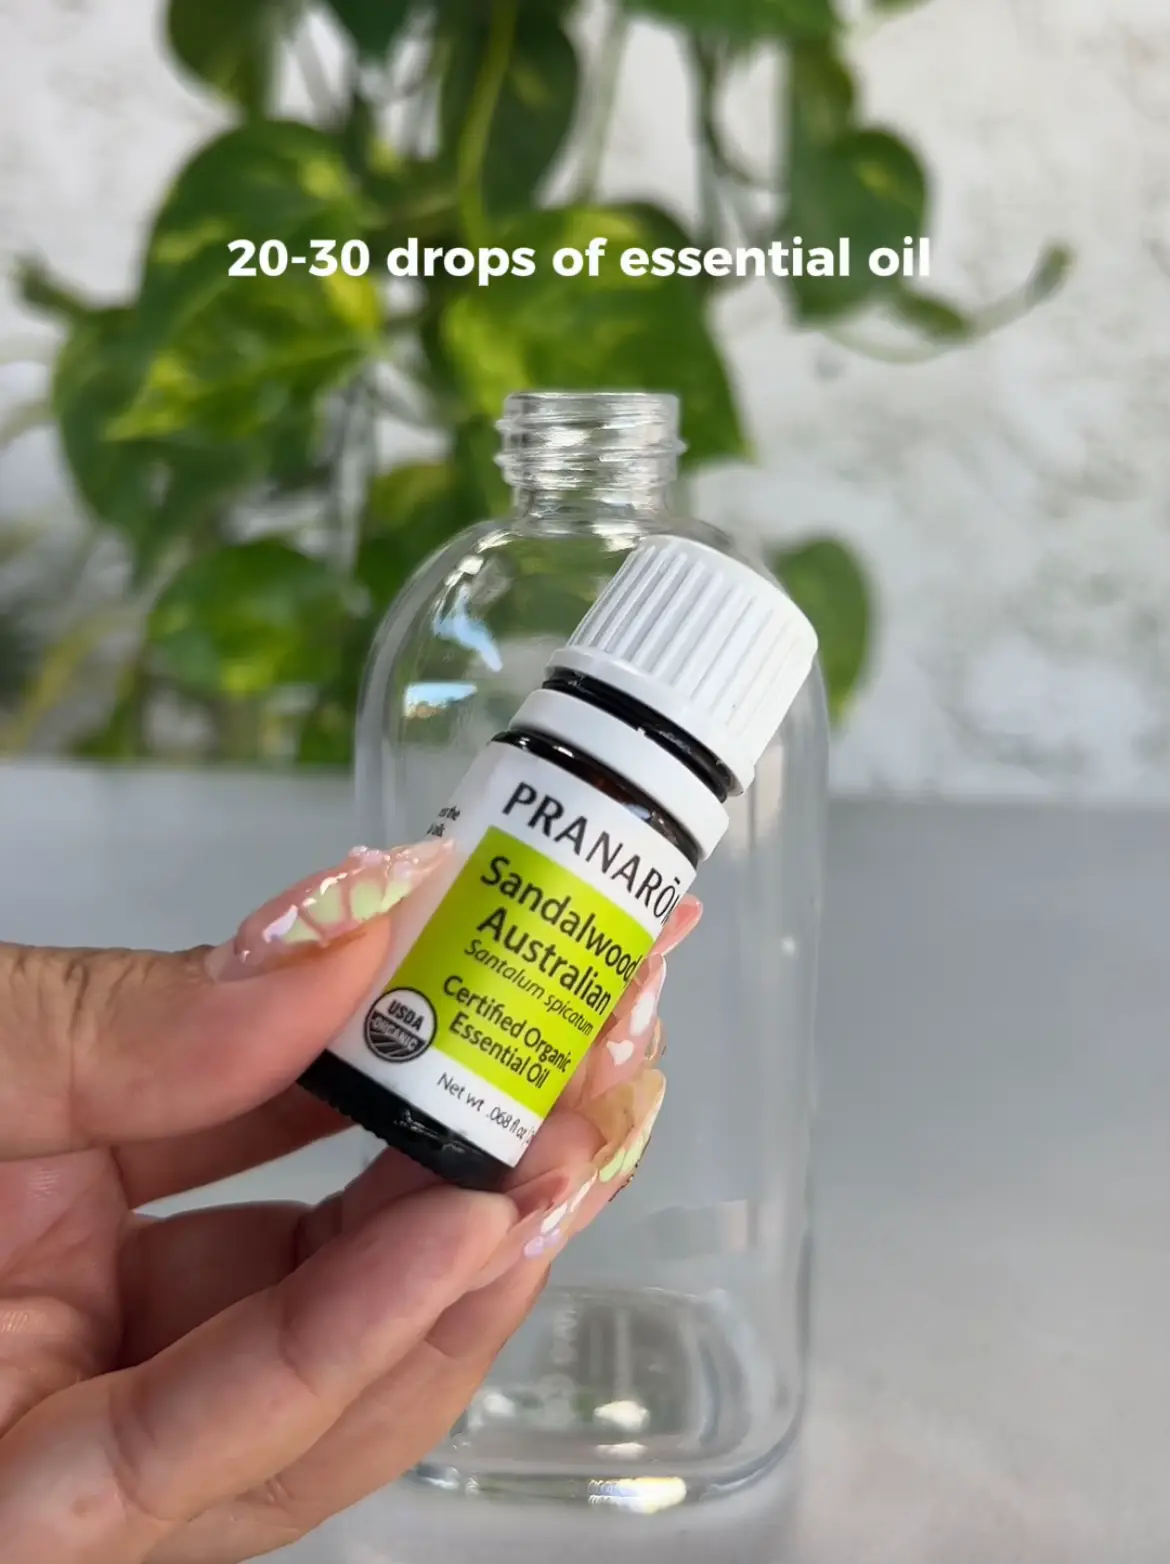 Pranarom Lavender Essential Oil (15Ml) - 100% Pure Natural Therapeutic  Grade Essential Oil USDA Certified Organic